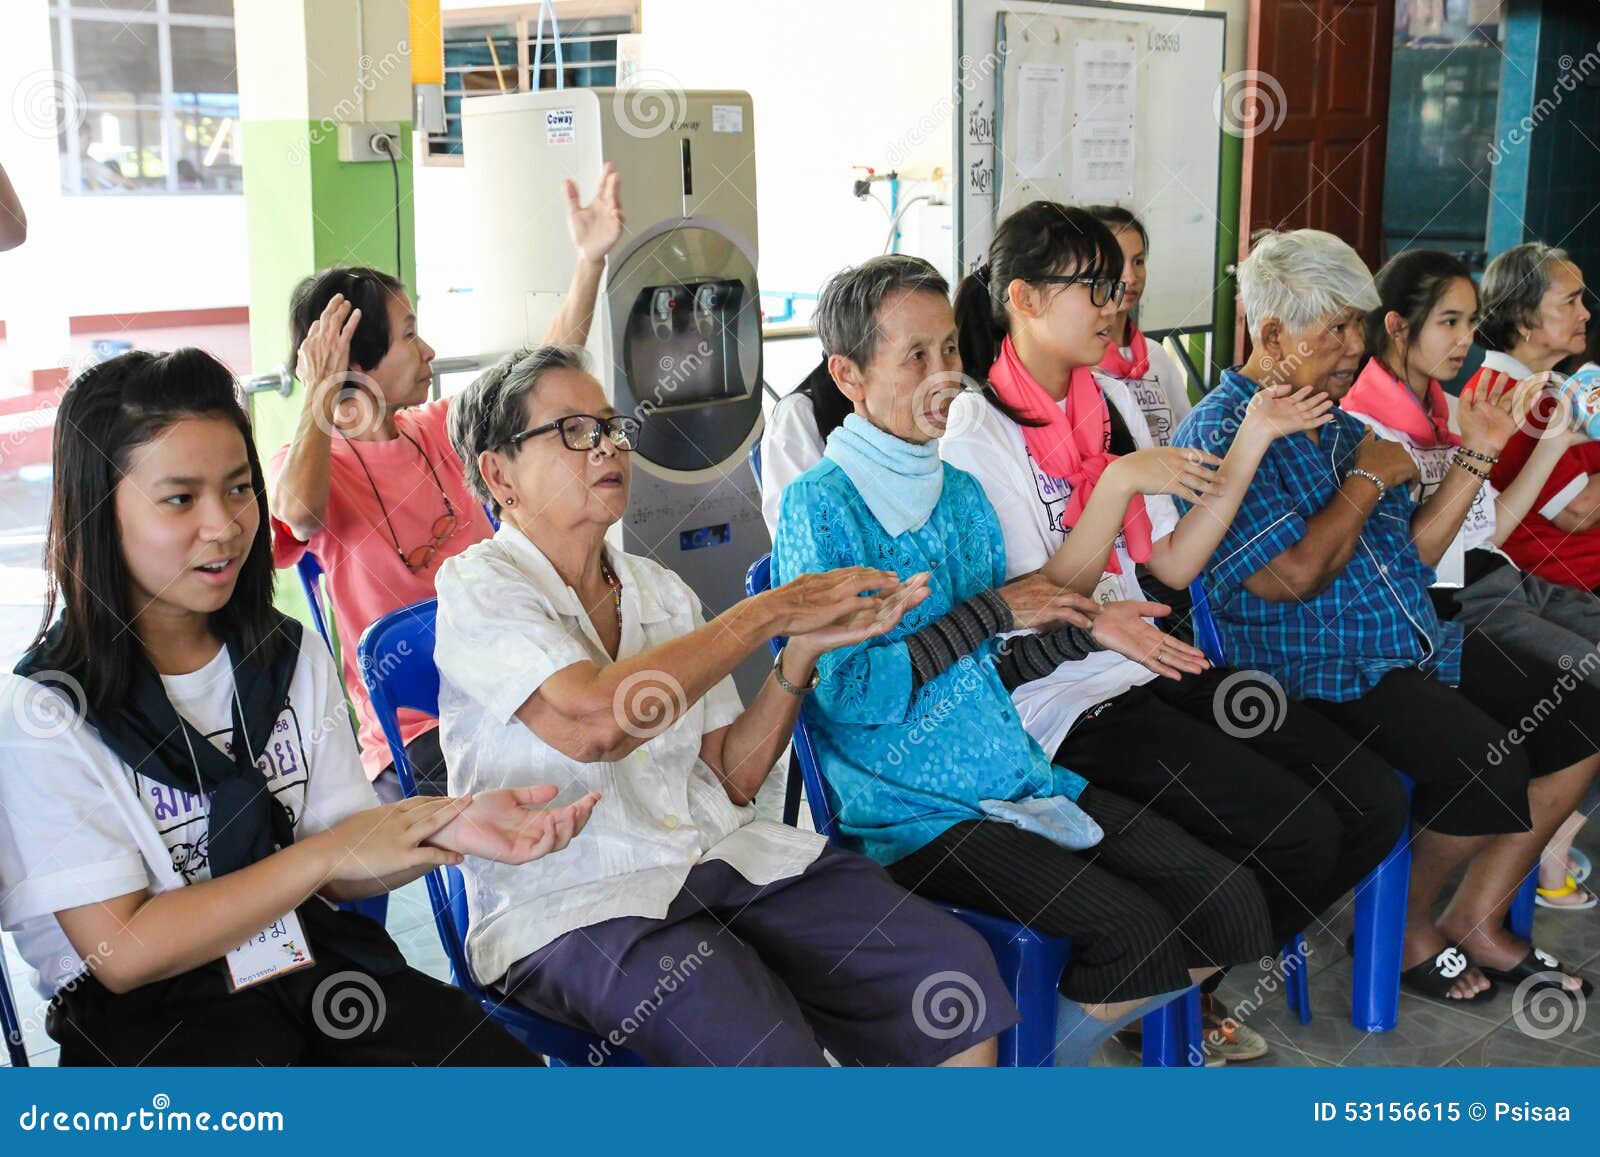 children-singing-elderly-people-thammapakorn-nursing-hom-chiang-mai-thailand-march-march-asian-home-chiang-mai-thailand-53156615.jpg